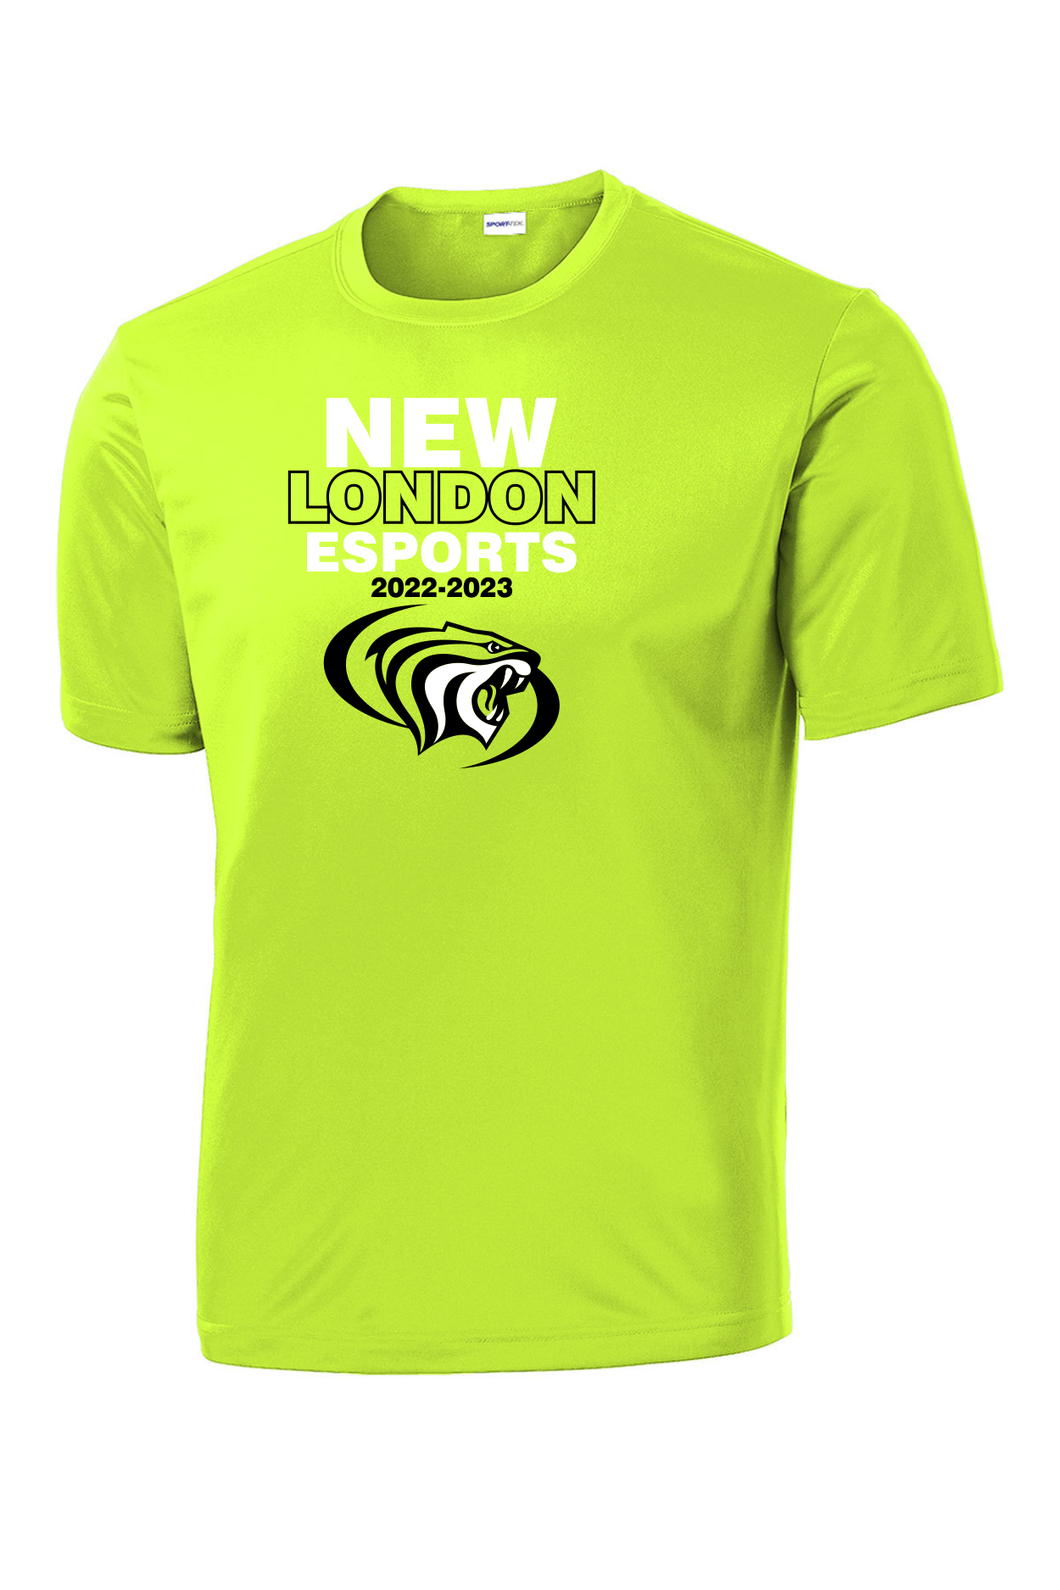 New London E-Sports